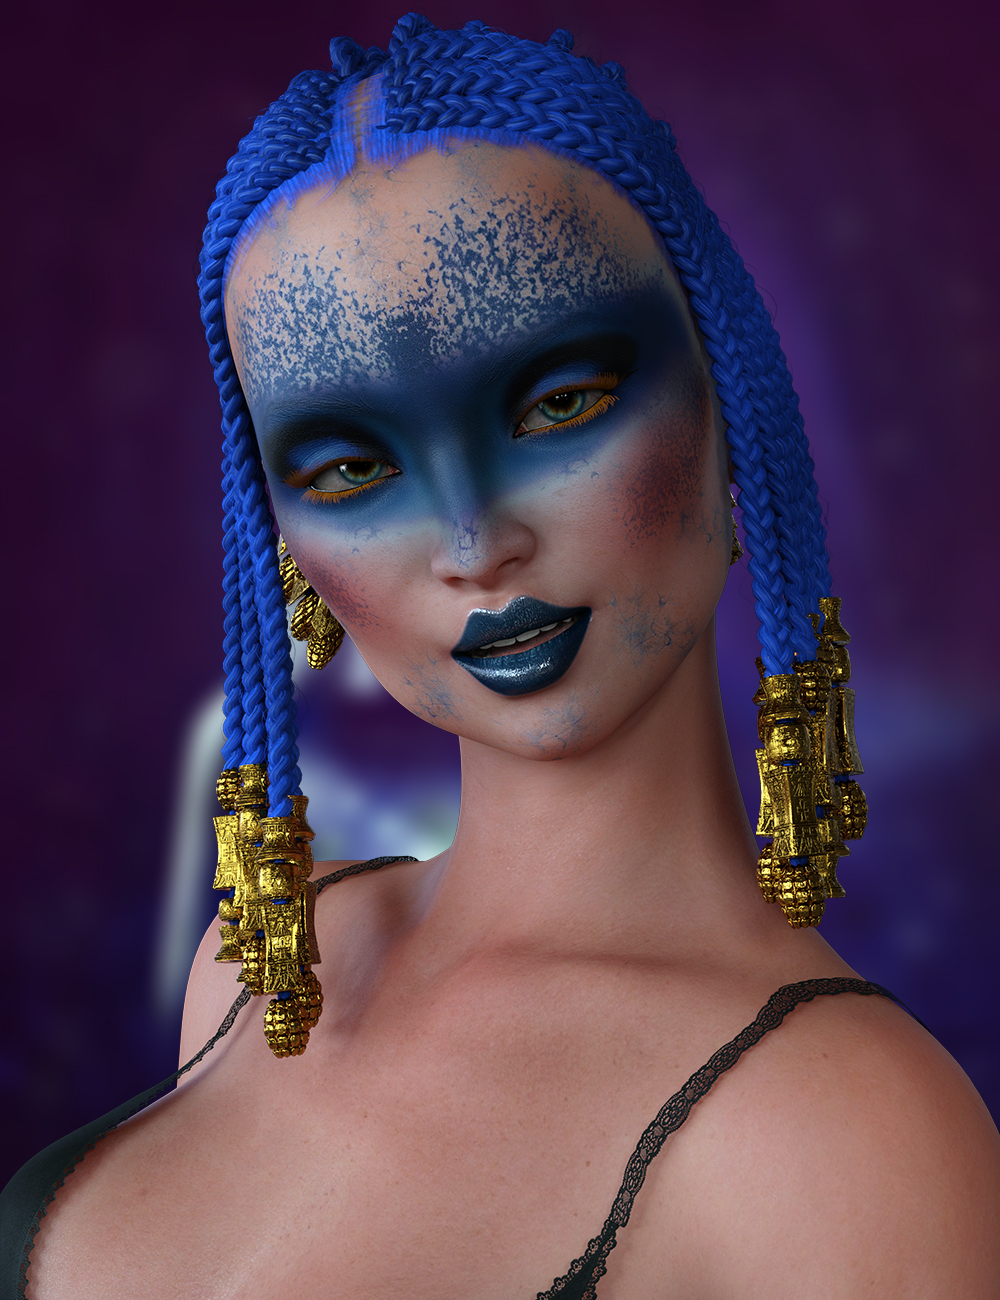 Kikury for Genesis 8 Female by: hotlilme74, 3D Models by Daz 3D